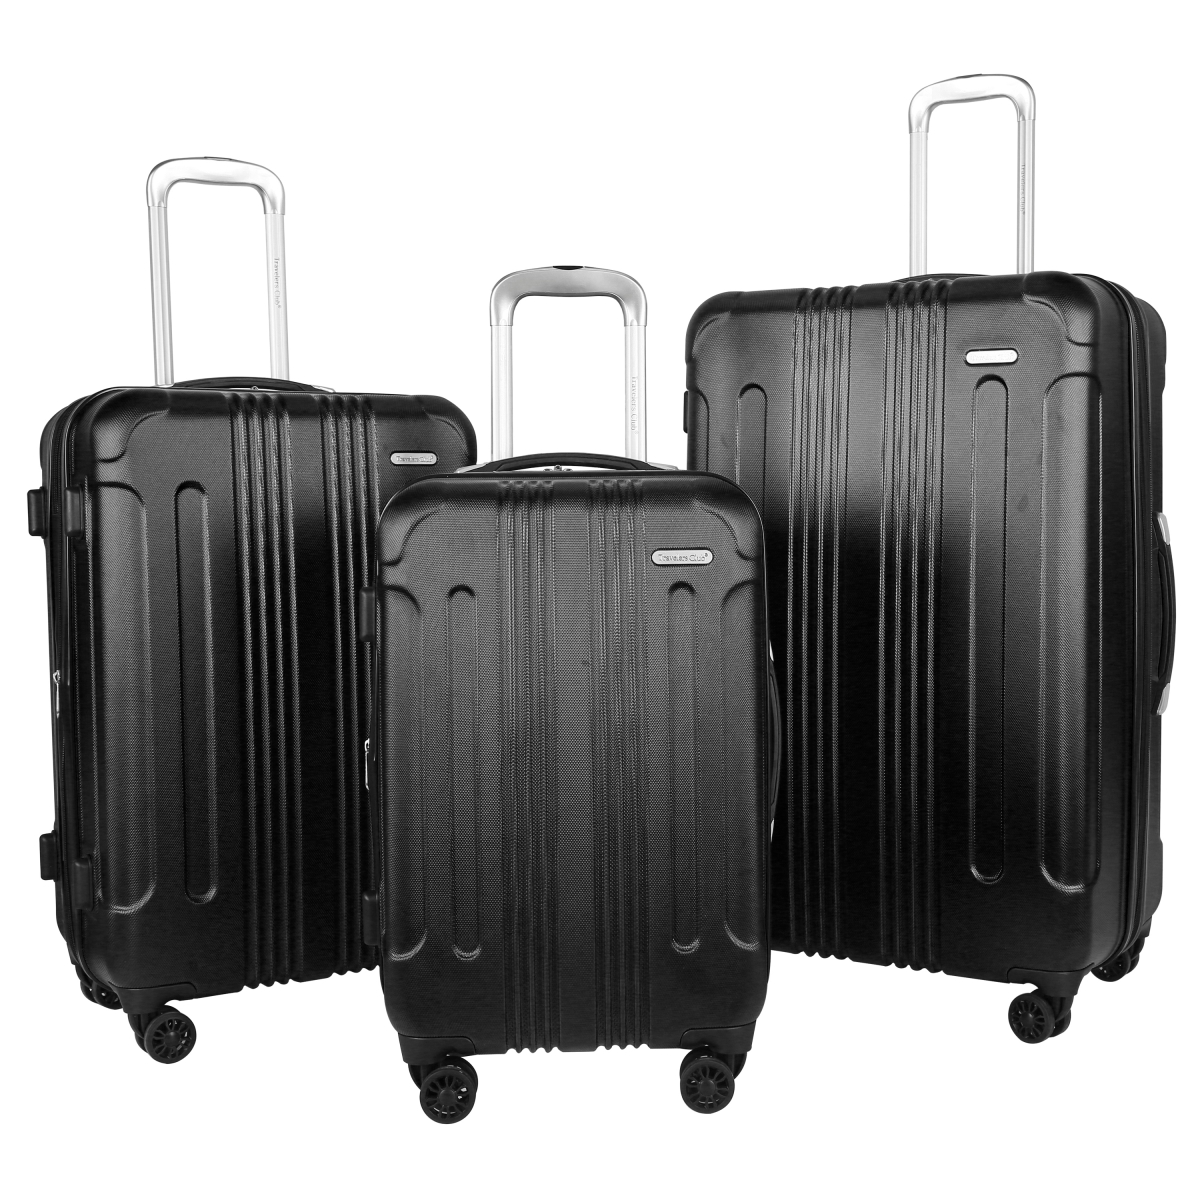 Hs-67003-ex-001 Expandable Hard-sided Rolling Luggage Set, Black - 3 Piece